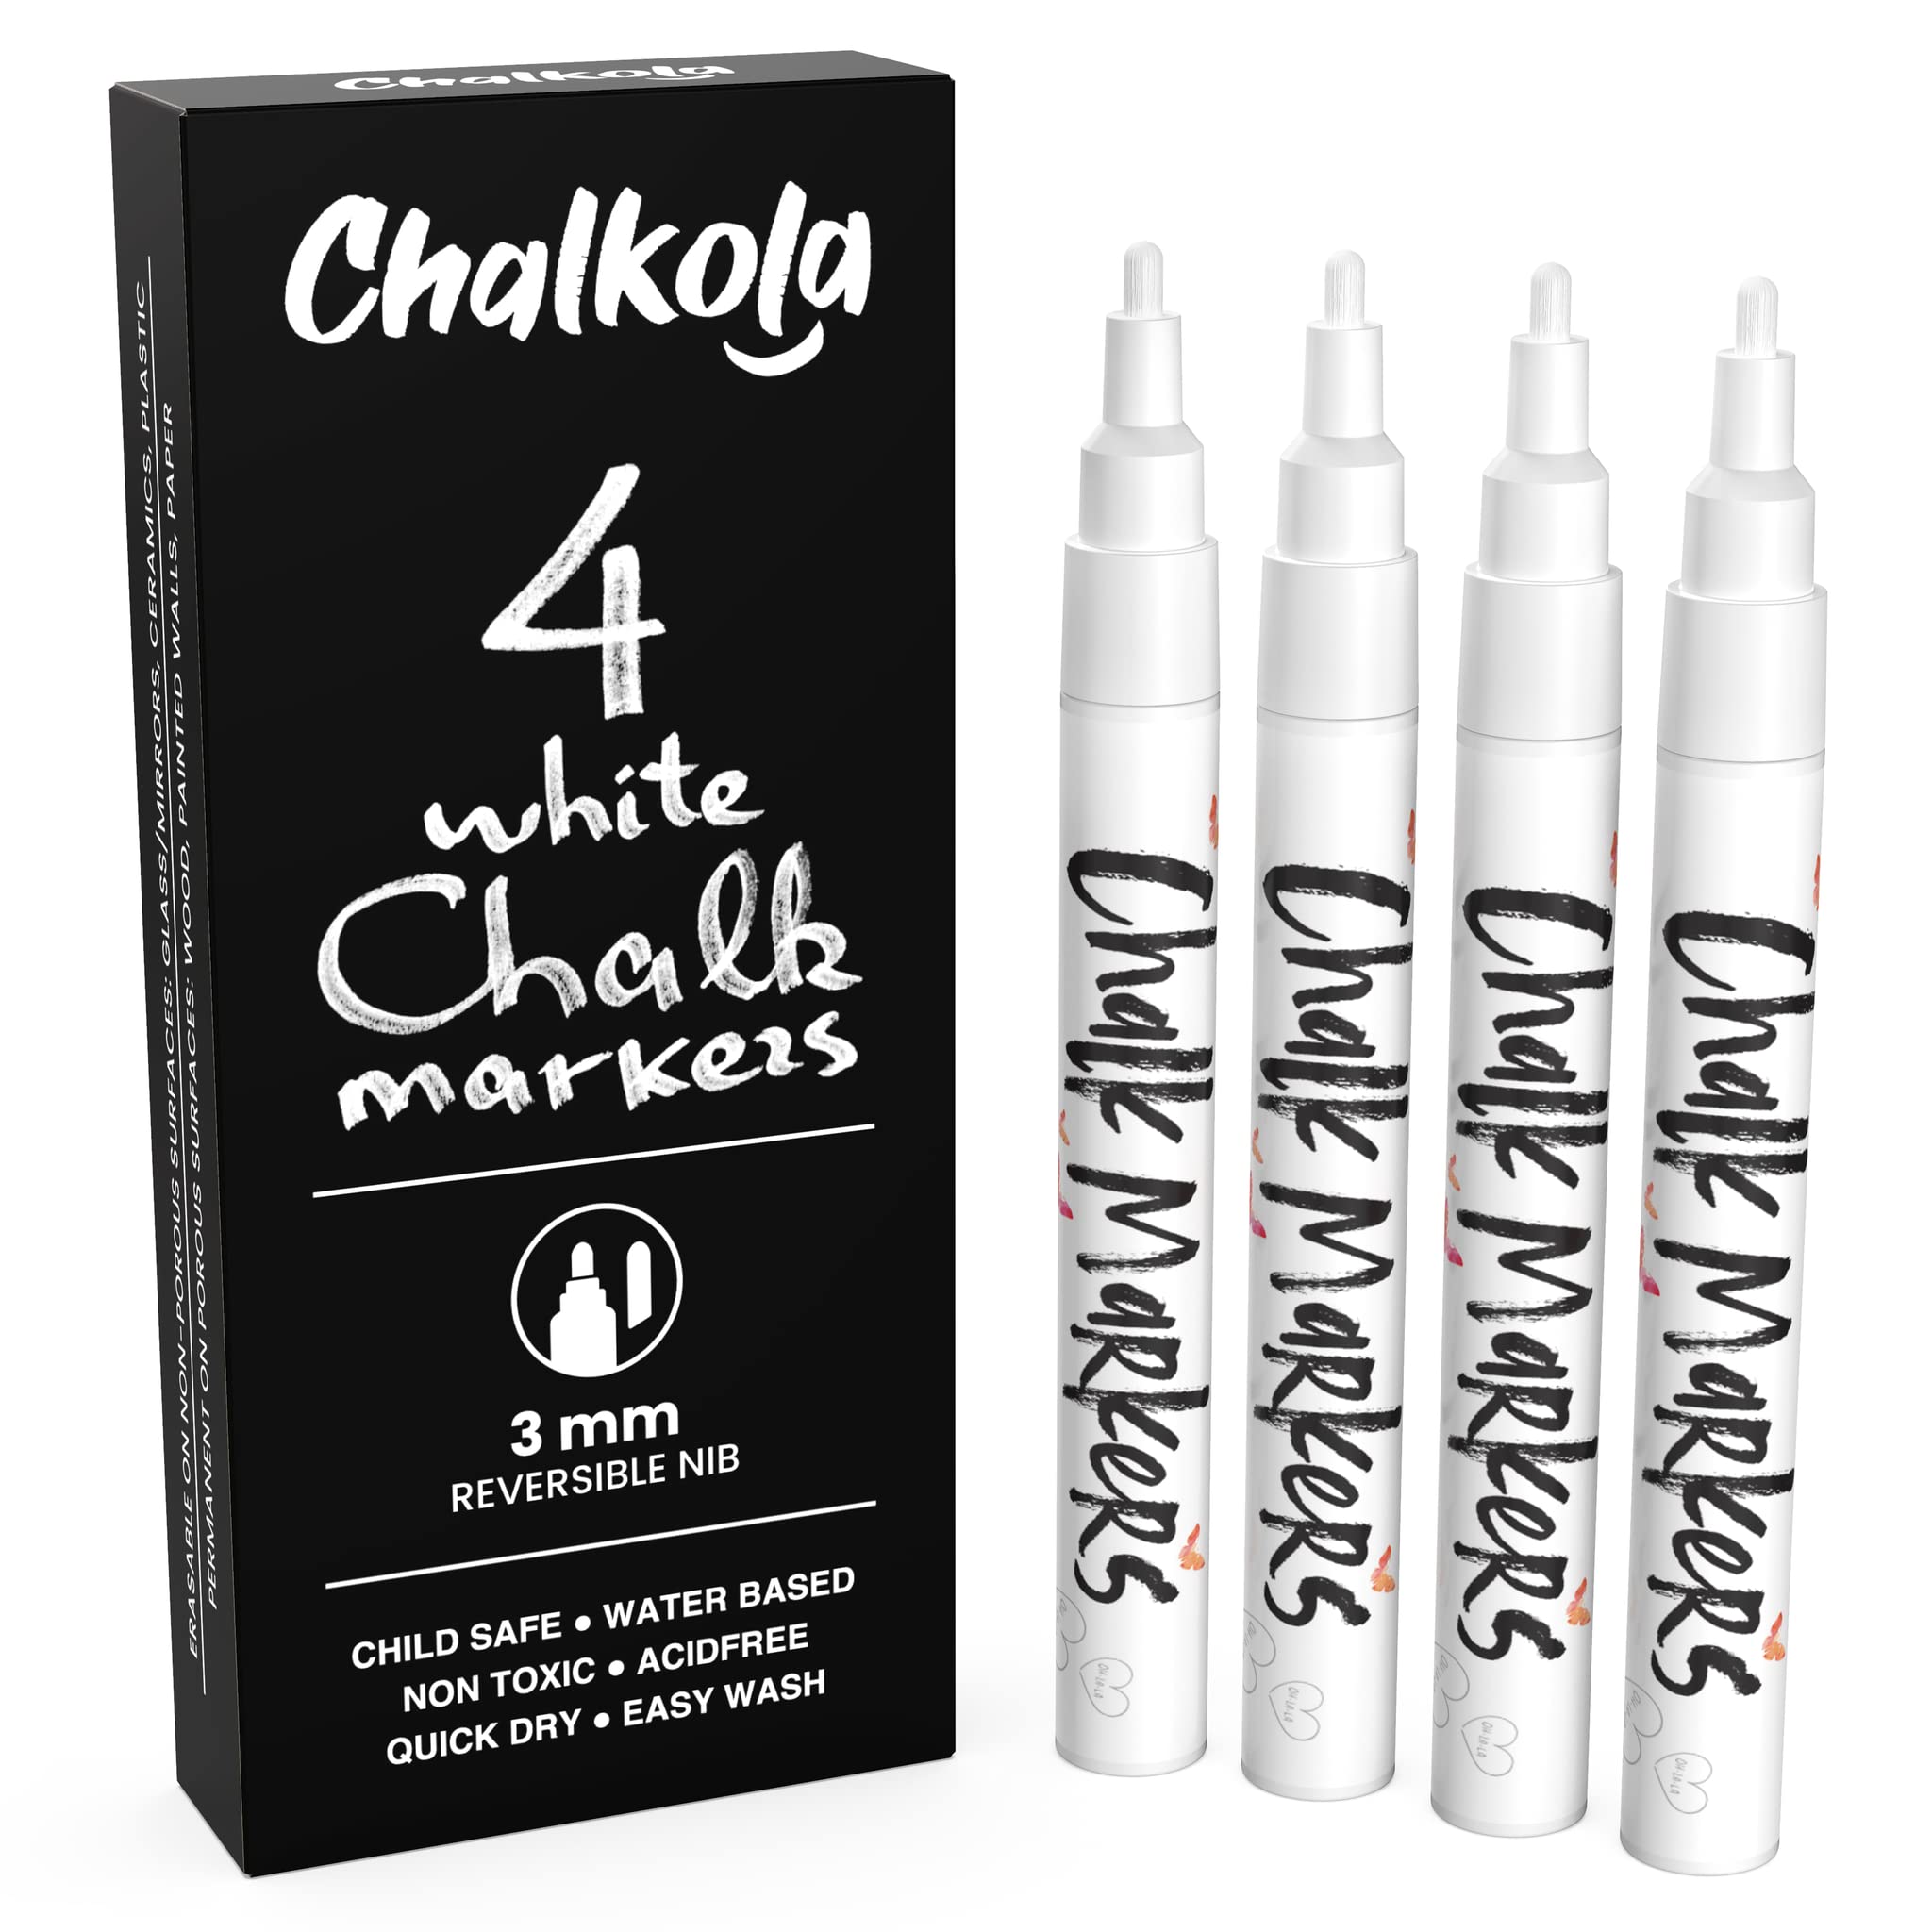 Chalkola Metallic Liquid Chalk Markers Fine Tip - Dry Erase Marker Pen for Chalkboard Signs, Windows, Blackboard, Glass - 3mm Reversible Tip (10 Pack)